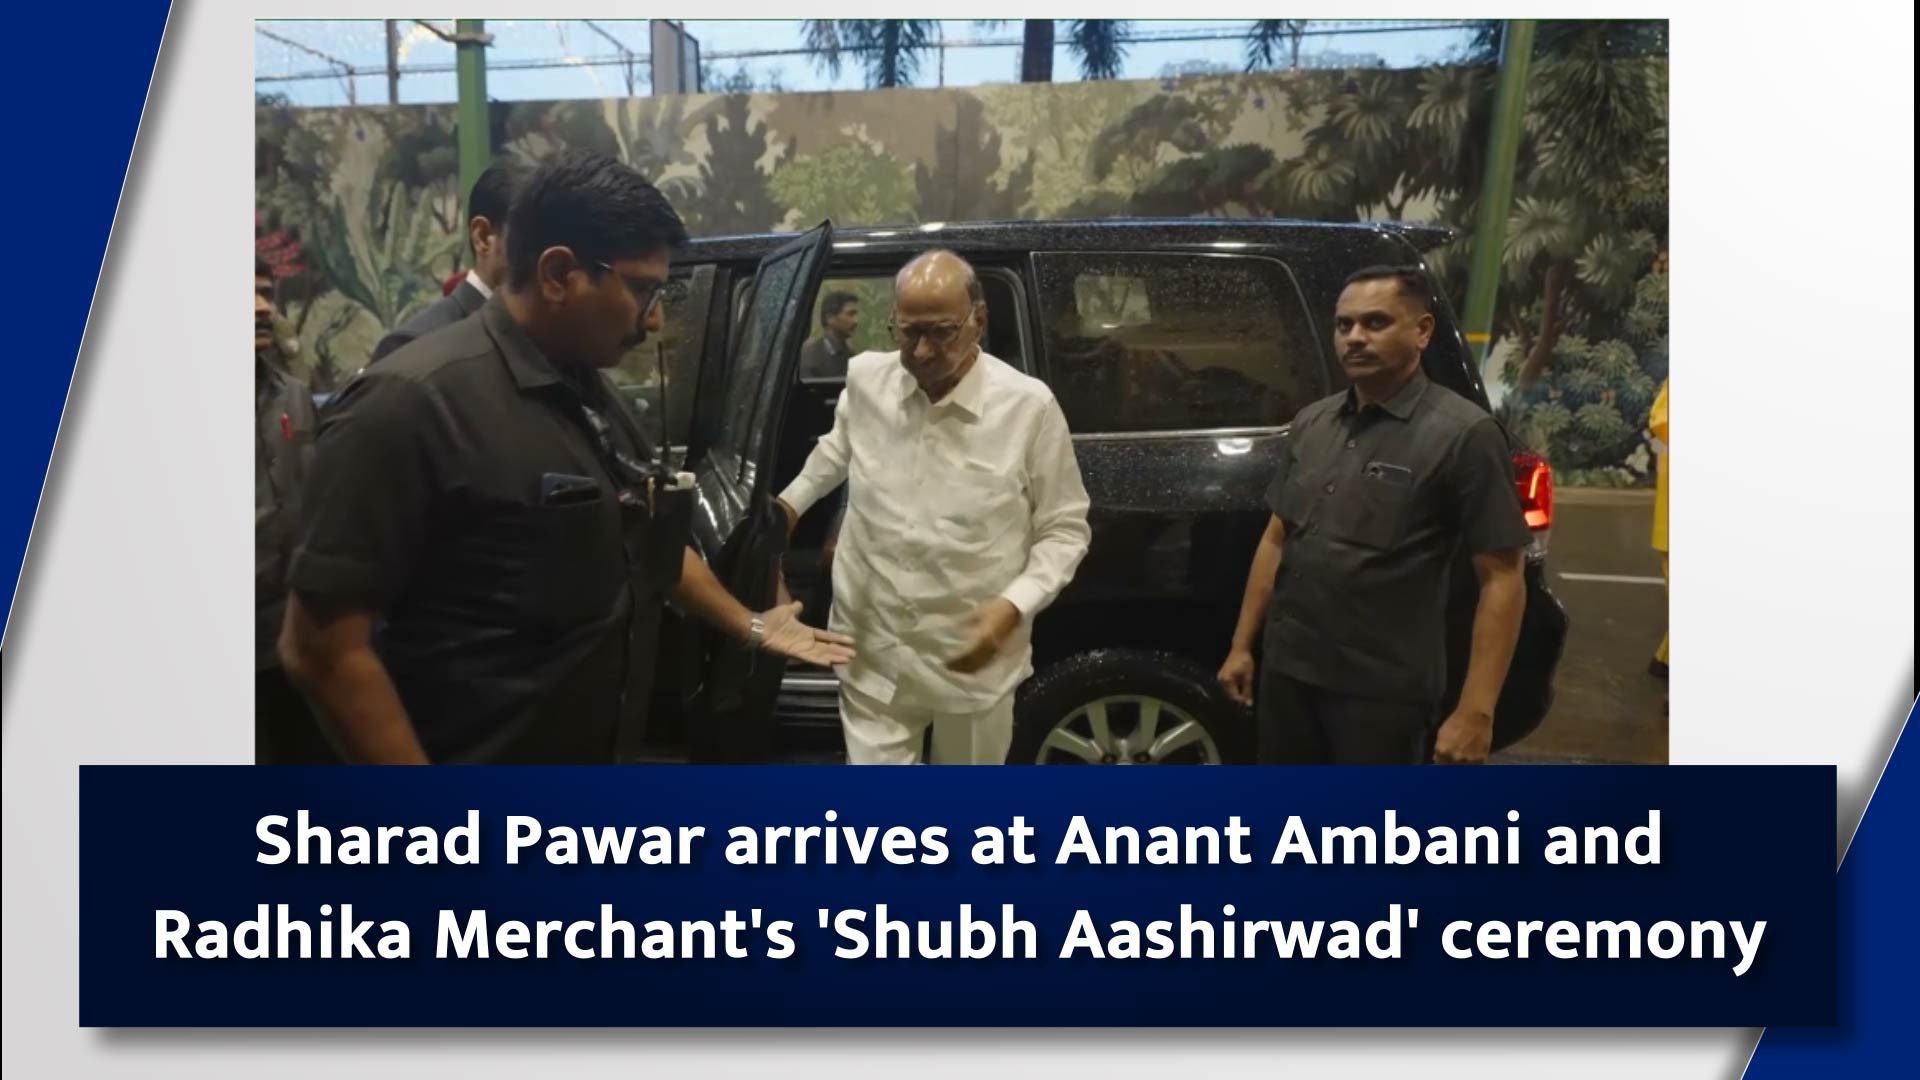 Sharad Pawar arrives at Anant Ambani and Radhika Merchant's 'Shubh Aashirwad' ceremony